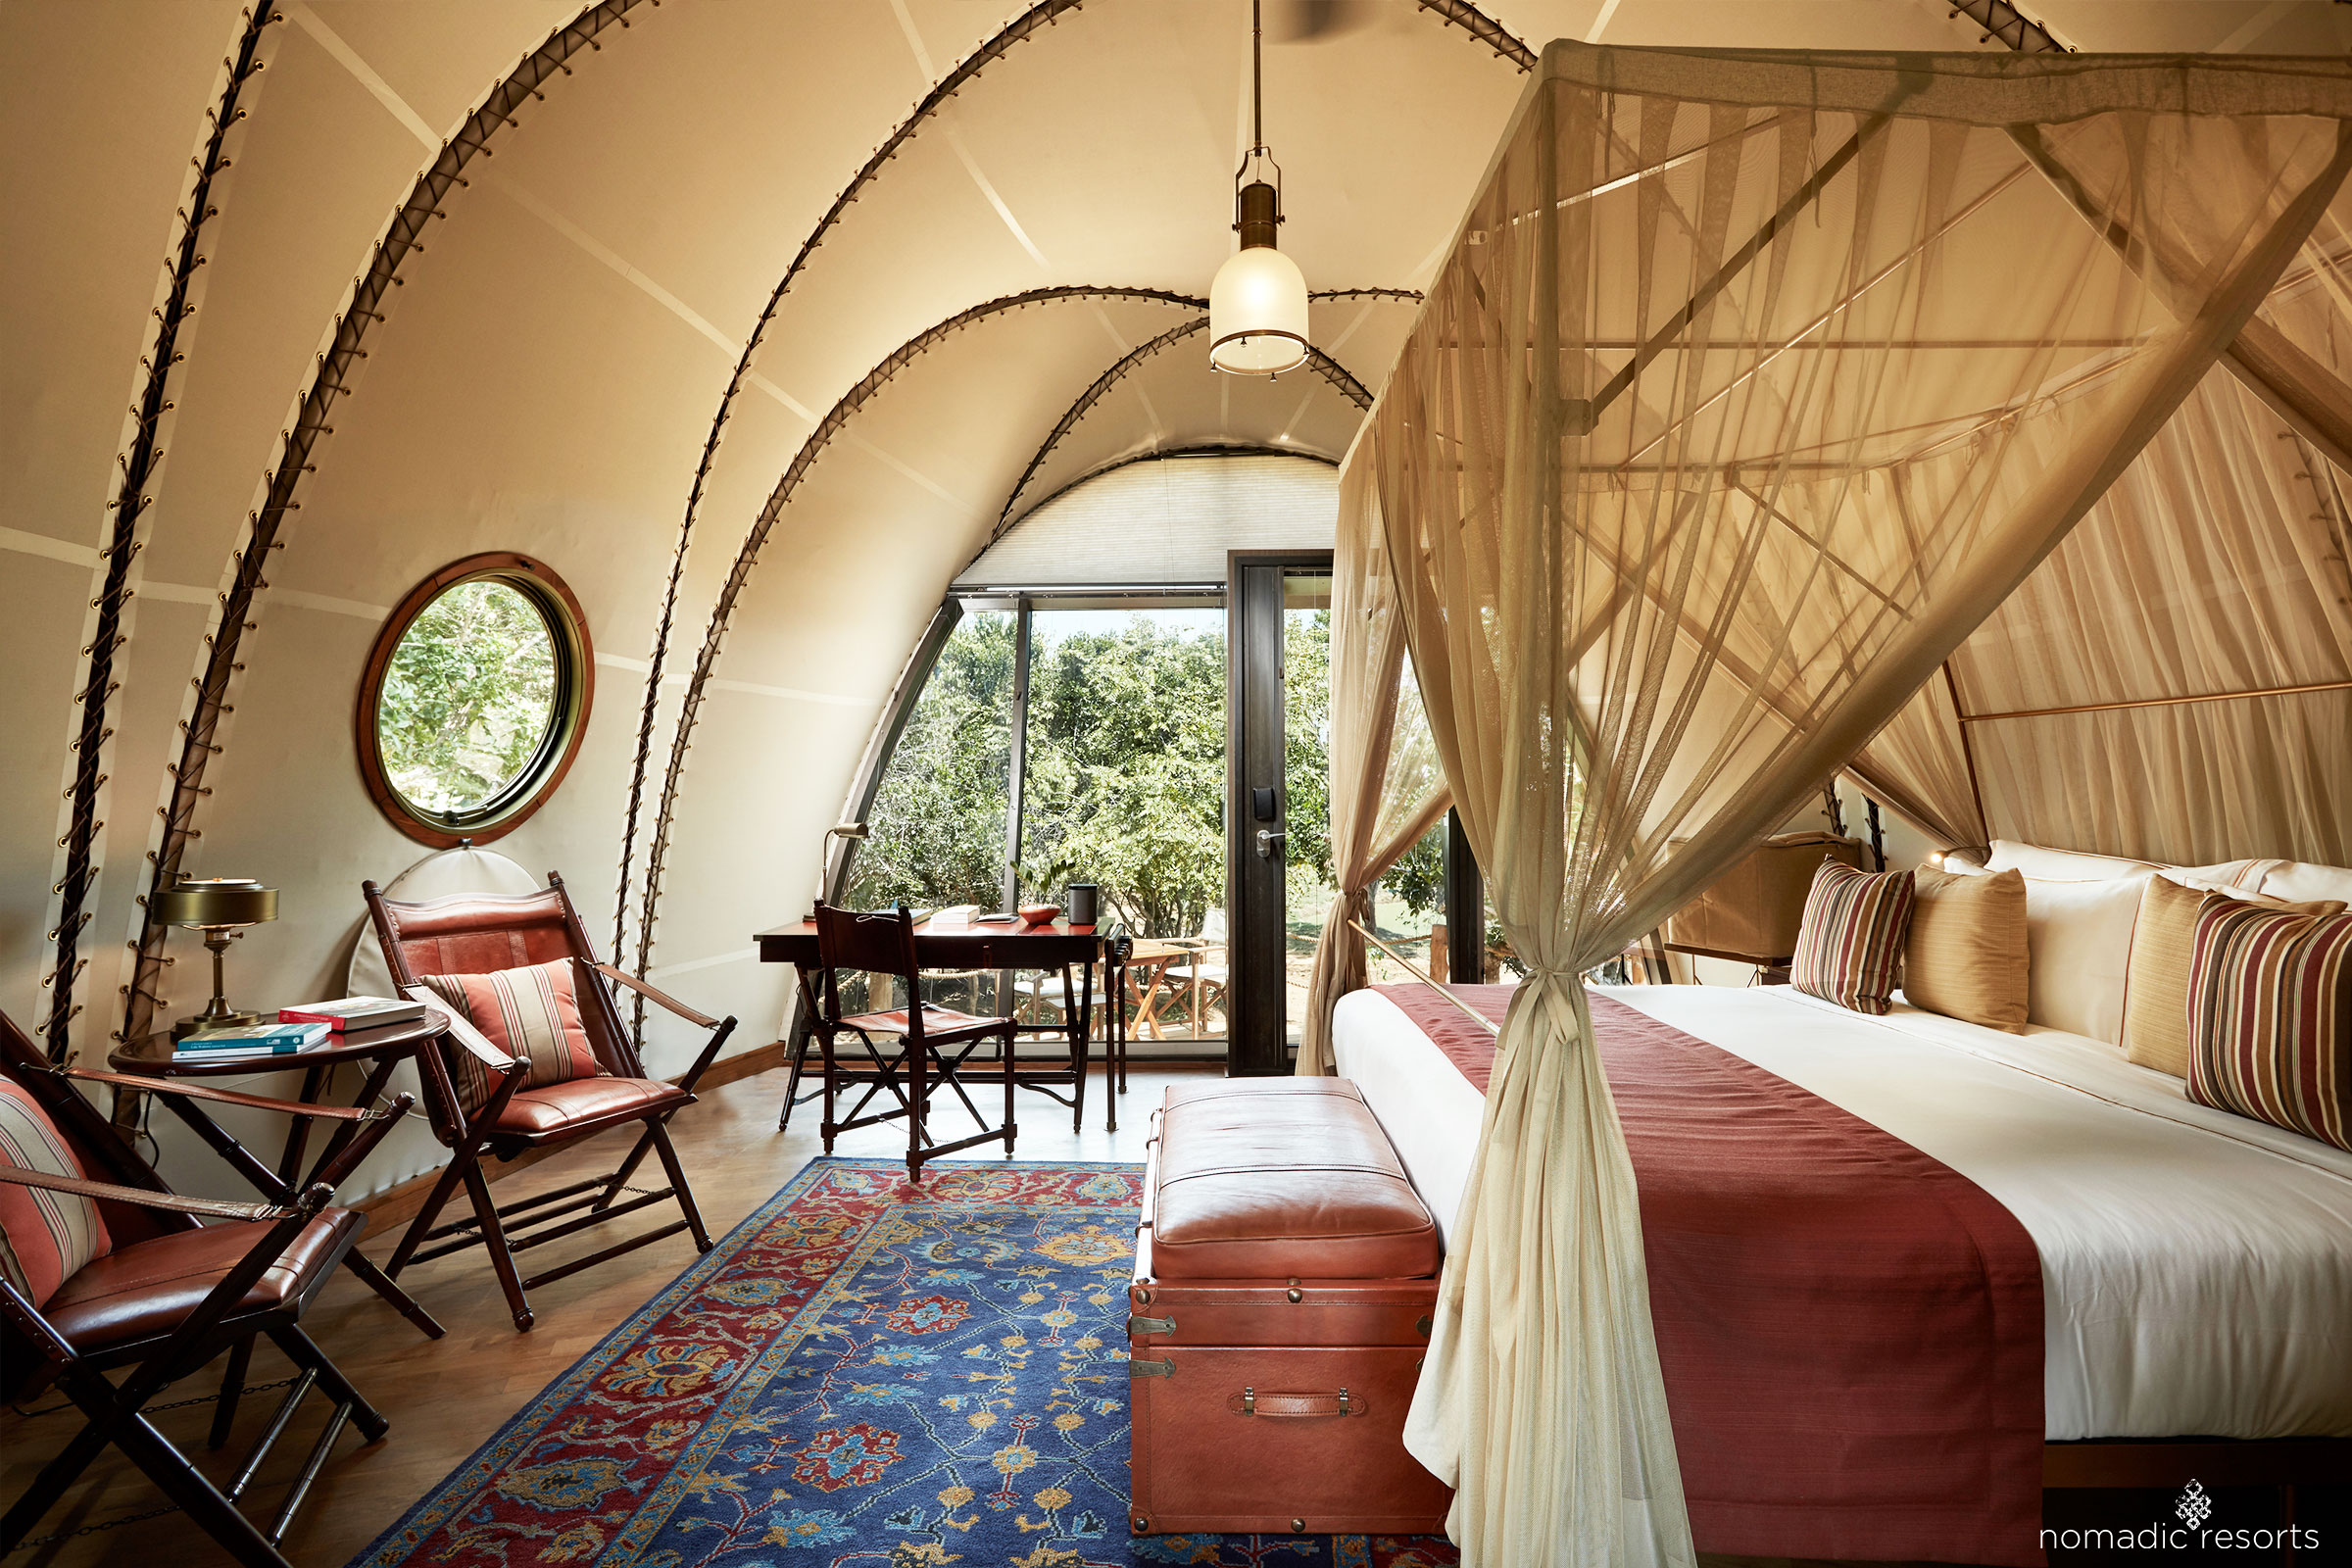 The Looper Interior design by Nomadic Resorts